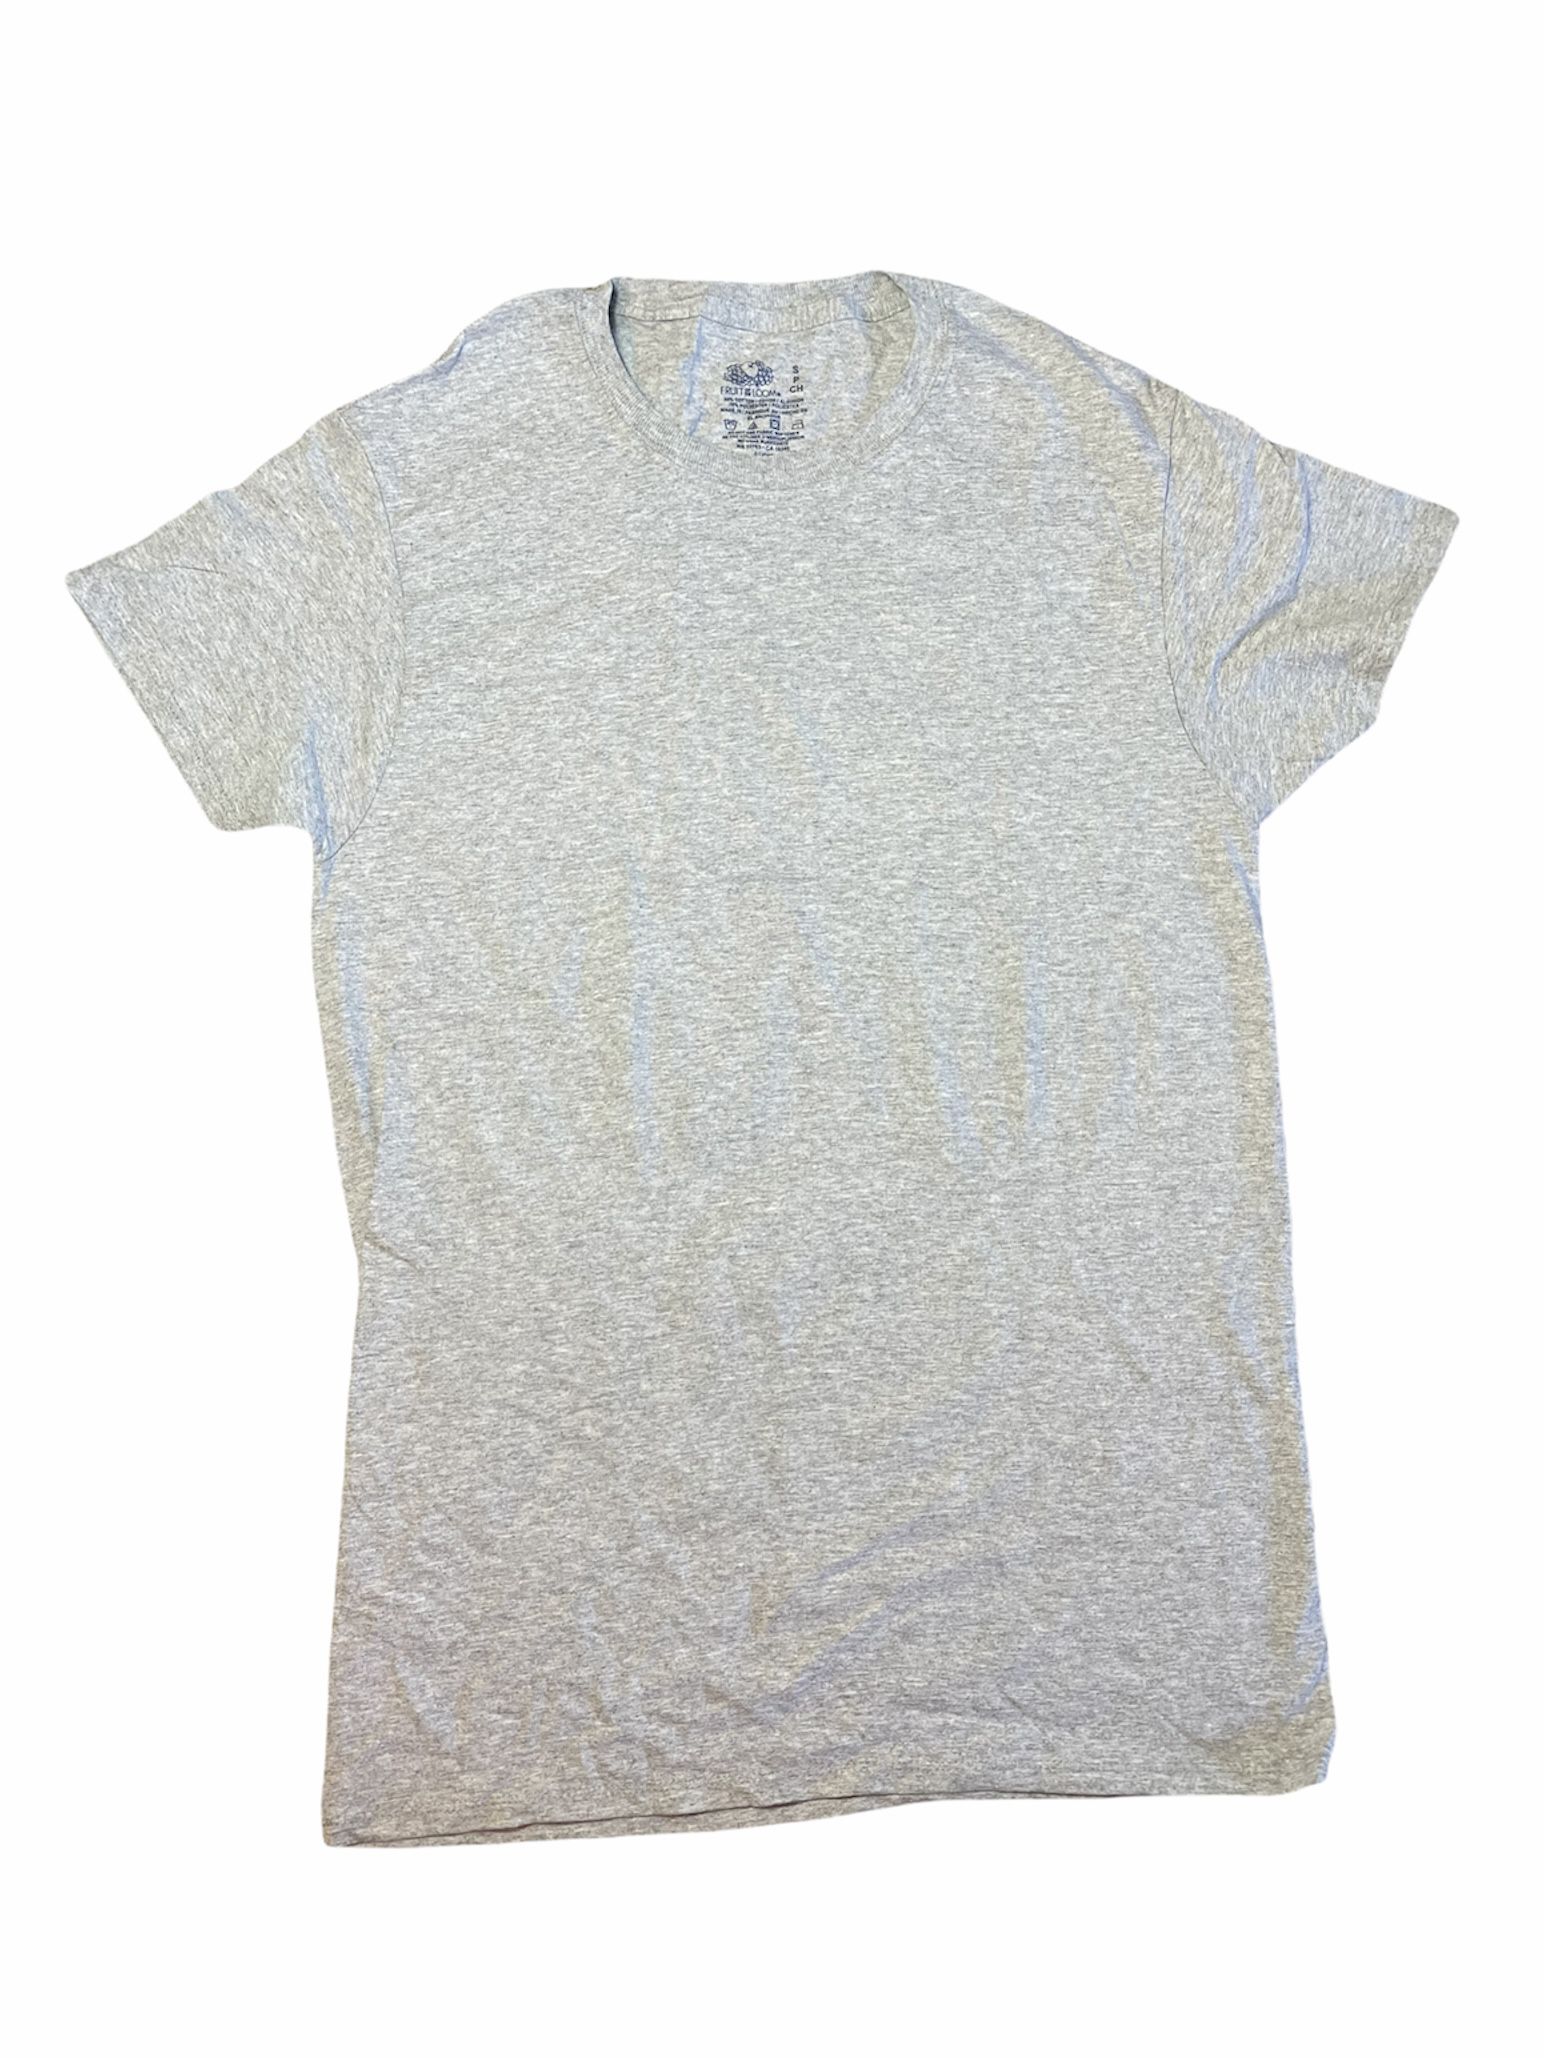 Bundle of 5 Men’s S Heather Grey Plain T Shirts New